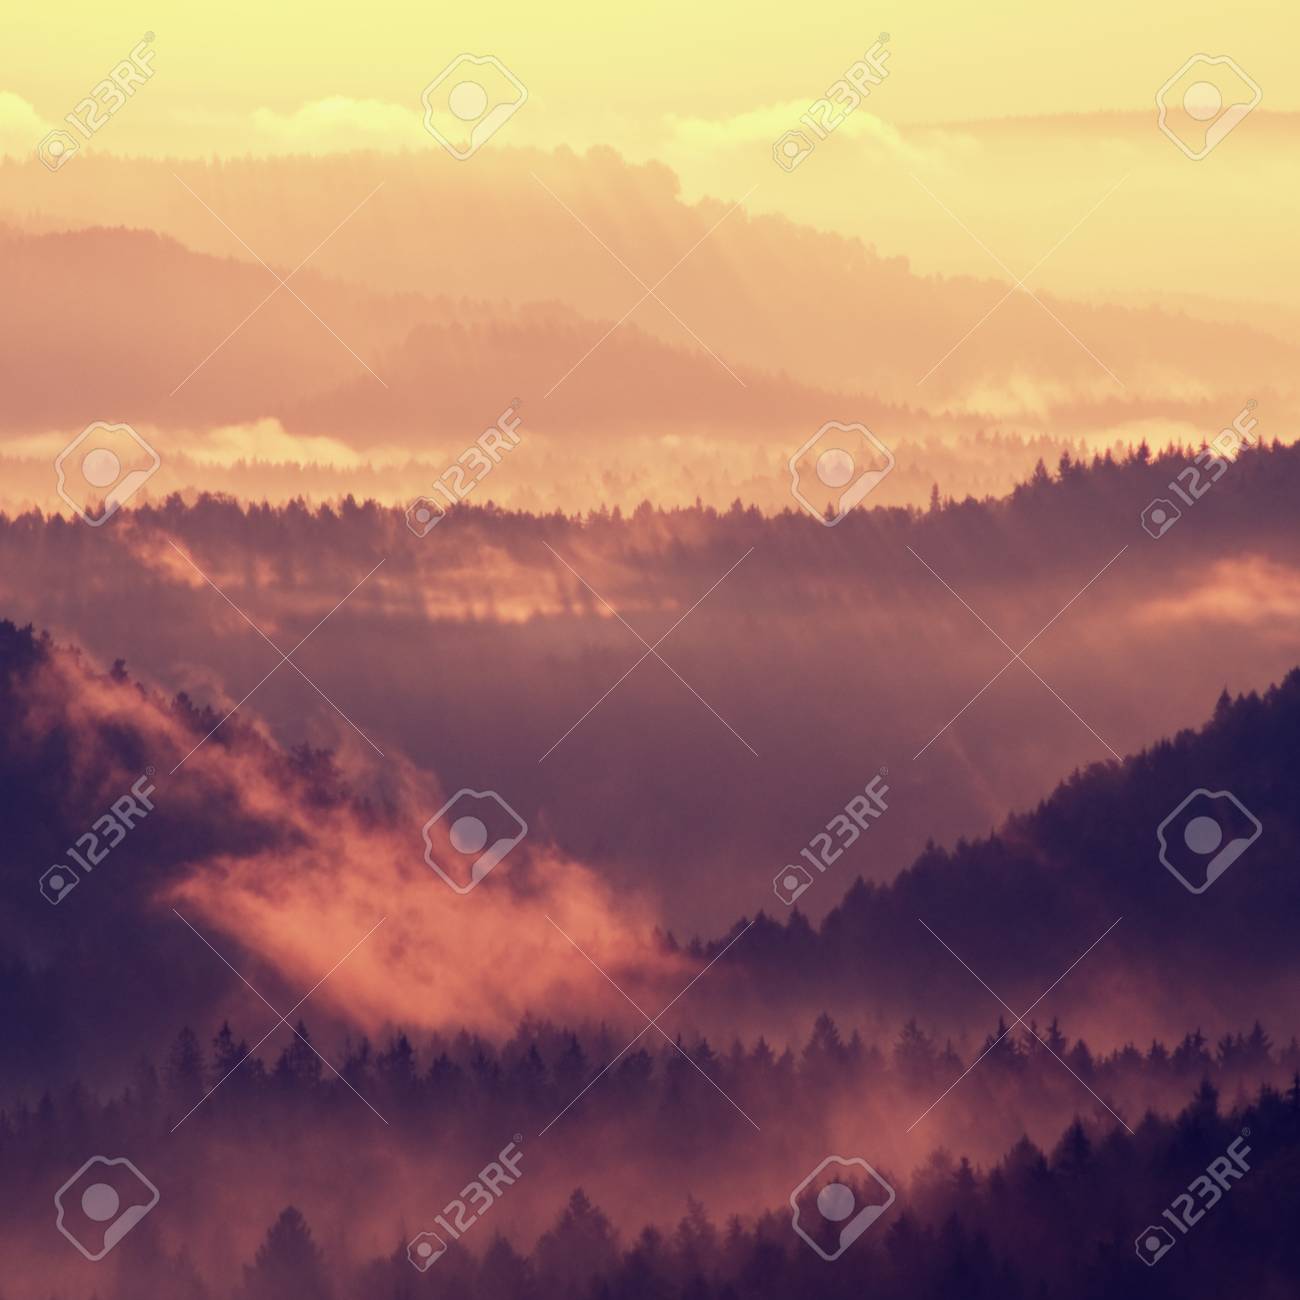 Marvelous Red Awakening Misty Beautiful Valley Peaks Of Hills